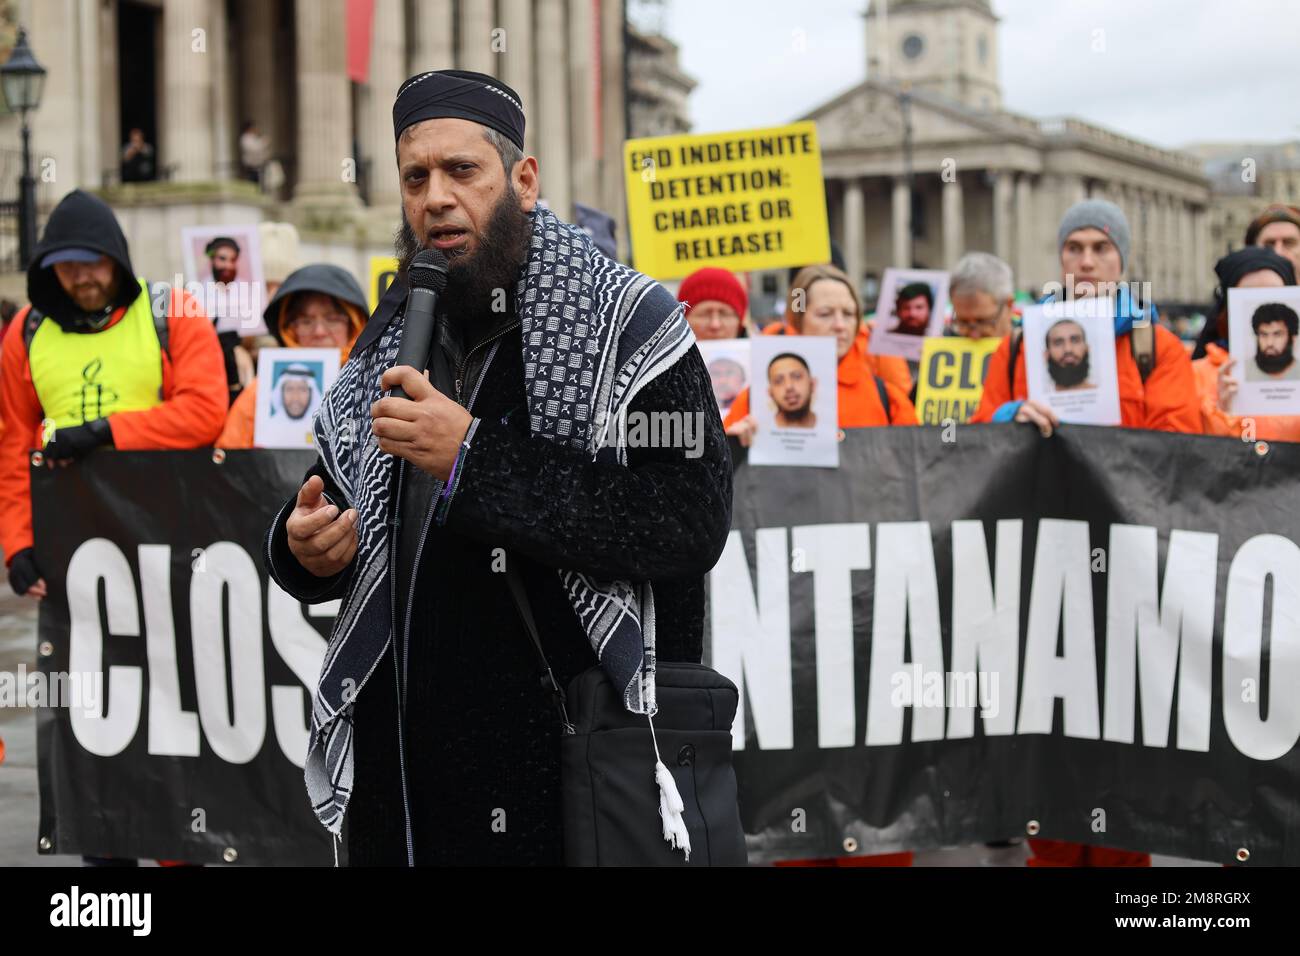 London, UK, 14 Jan 2023: Campaigners in Trafalgar Sq. demanding that Guantanamo Bay Prison must be closed. Credit: Sinai Noor/Alamy Live News Stock Photo